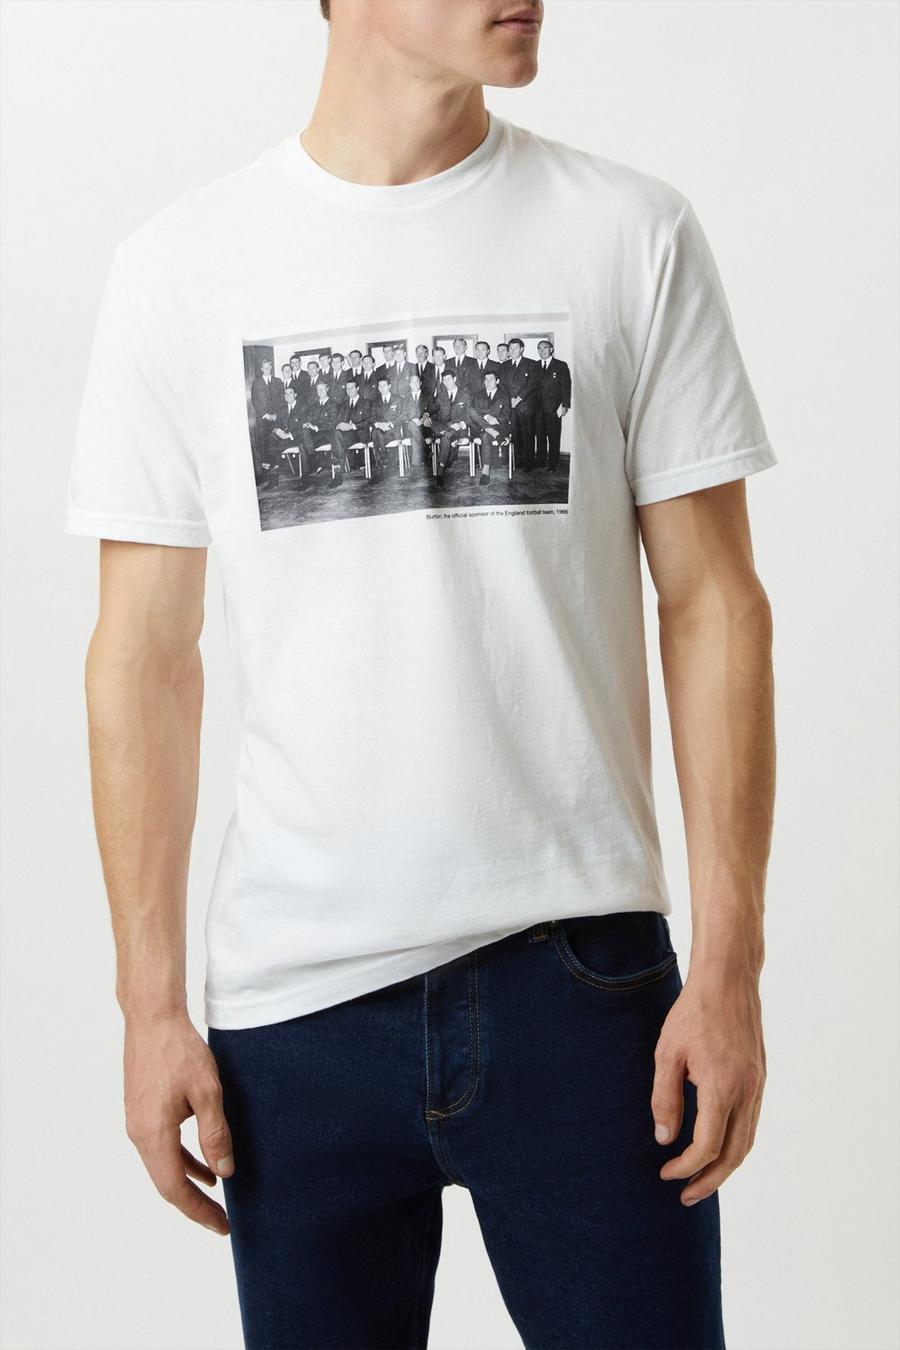 The 1966 England Winners Photo T-shirt